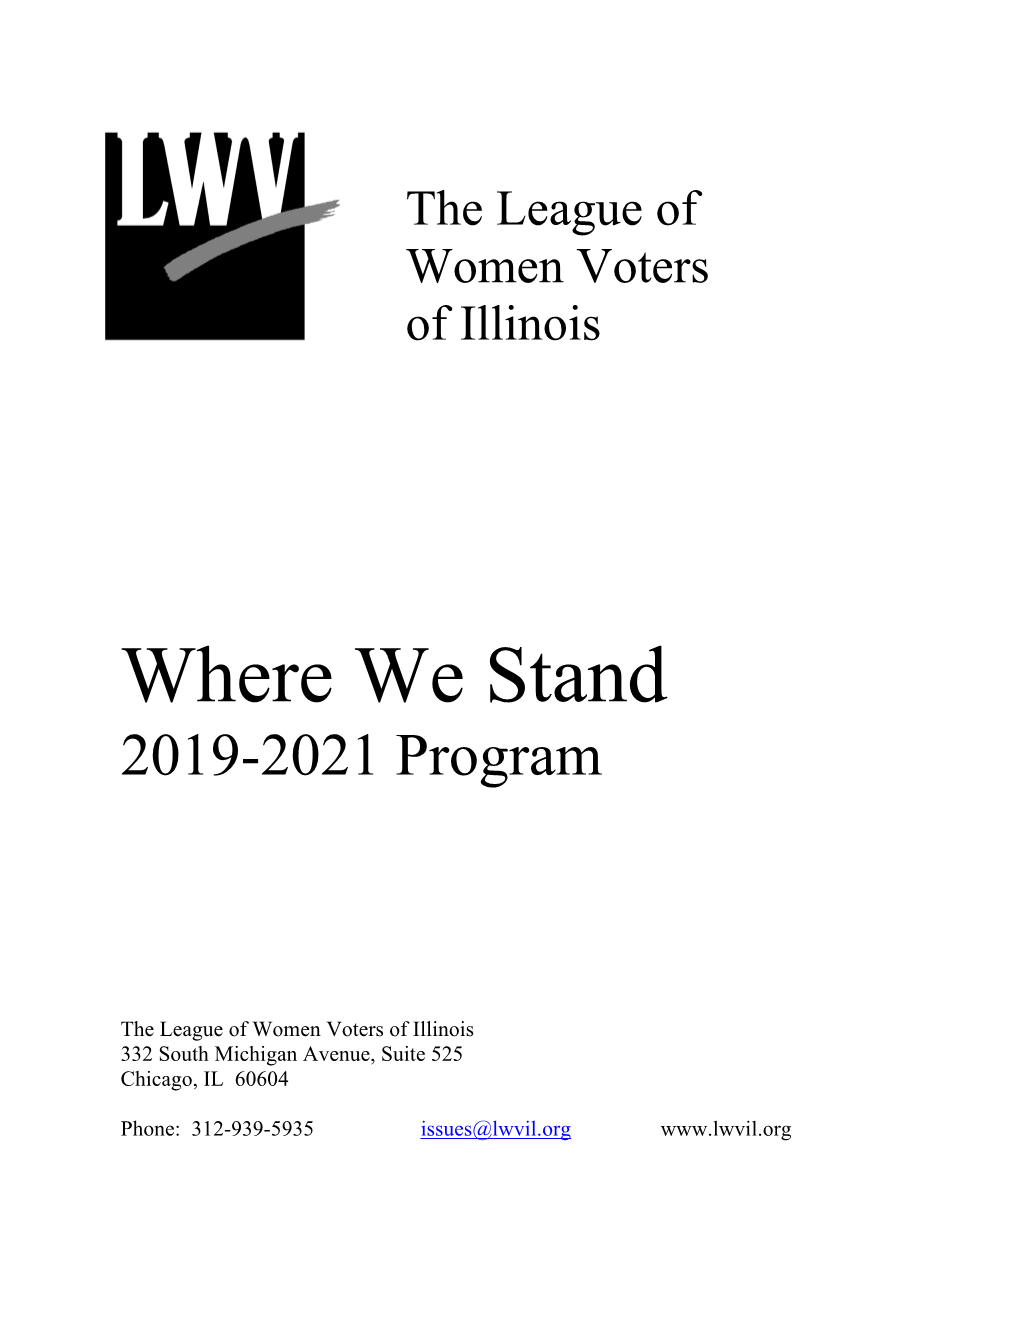 Where We Stand: 2019-2021 Program